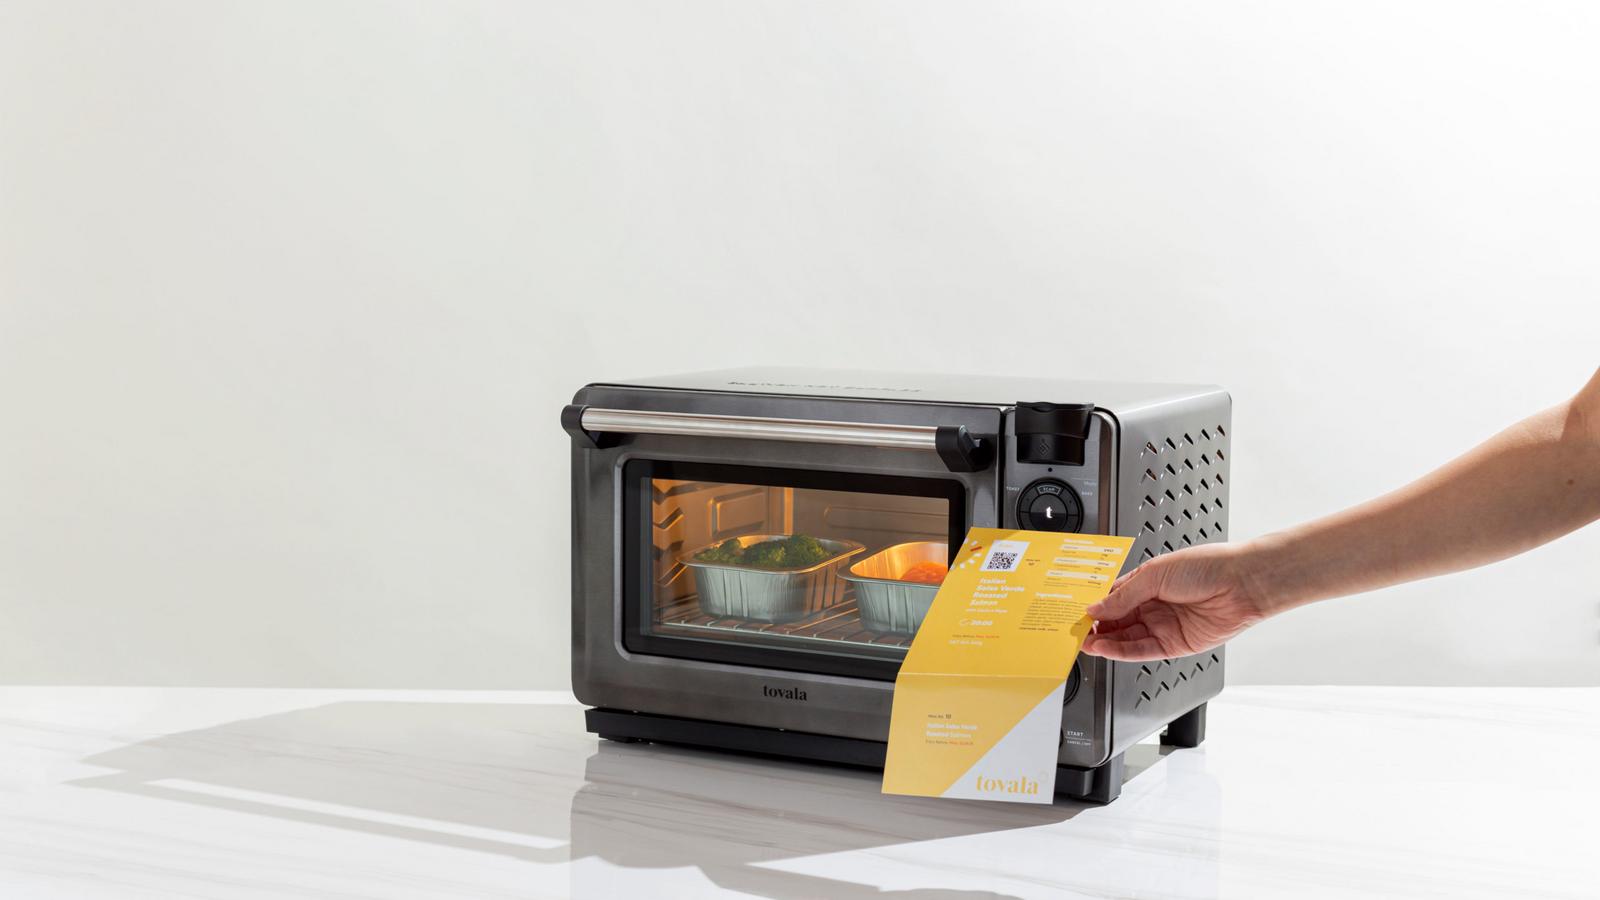 Chicago Inno - Smart oven startup Tovala raises $20M as sales rise